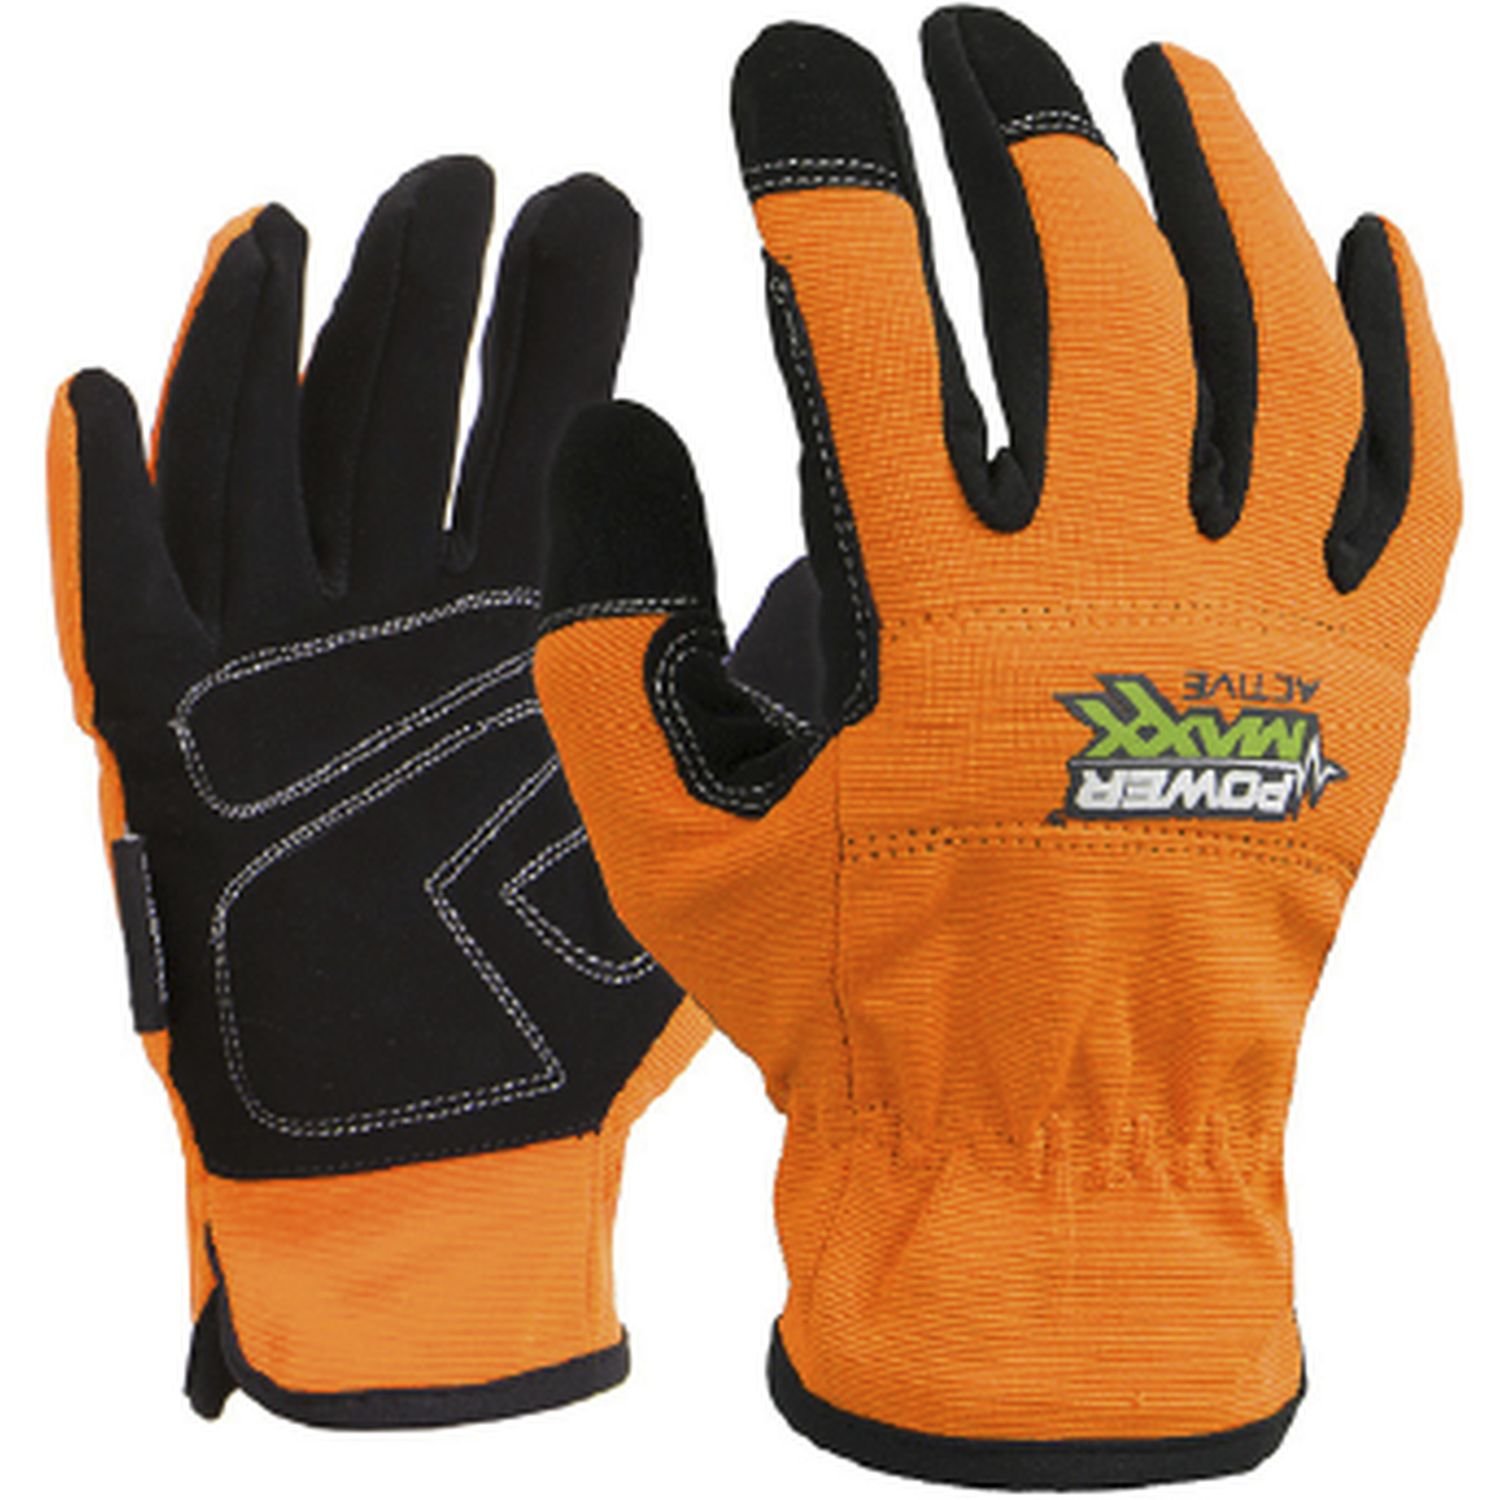 Power Maxx Active Anti Vibration Glove Orange/Black